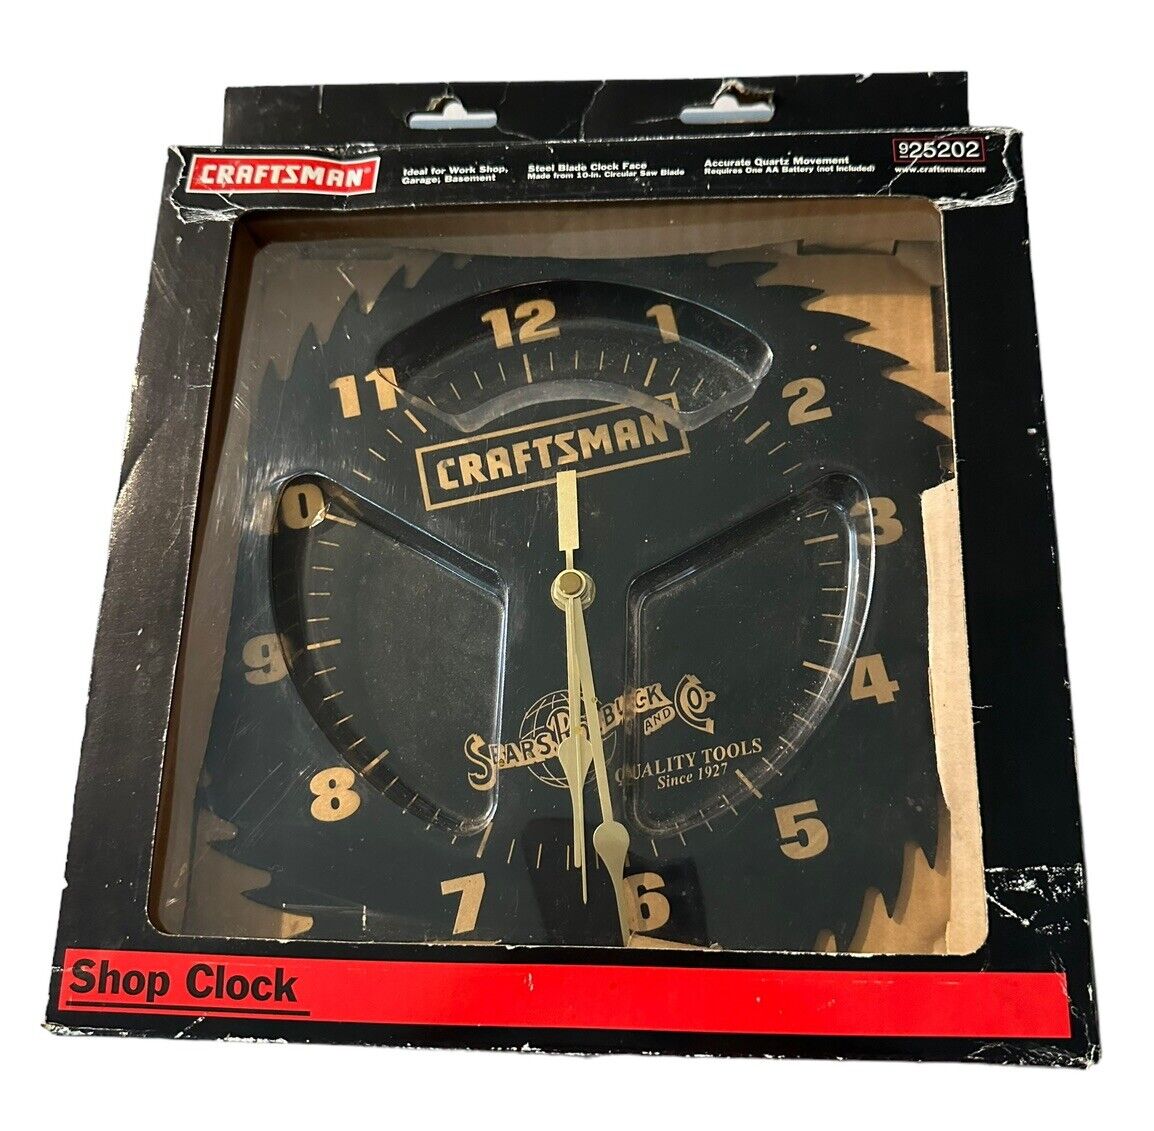 Vintage Sears Craftsman Black Steel Circular Saw Blade Shop Clock - New In Box